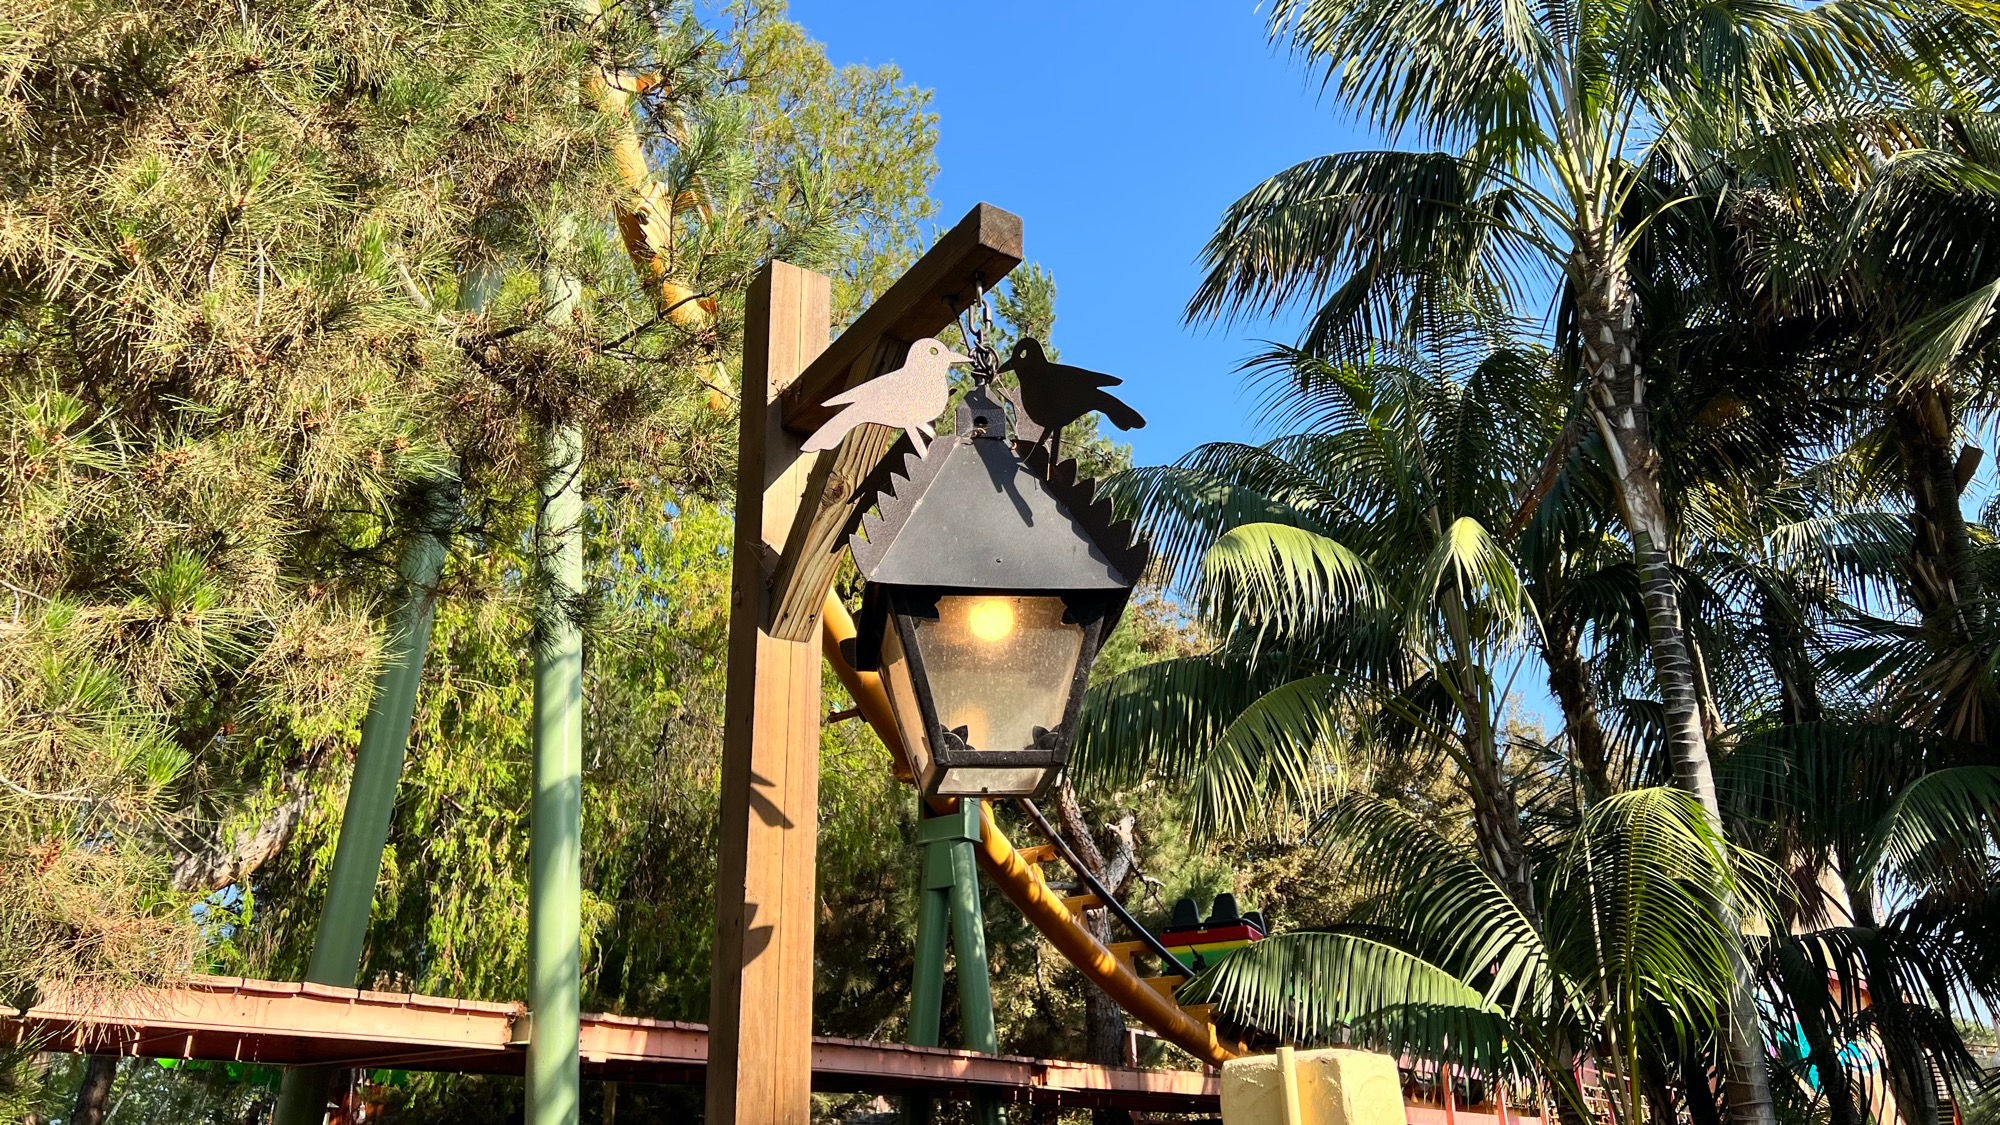 Birds Lamp Post near 